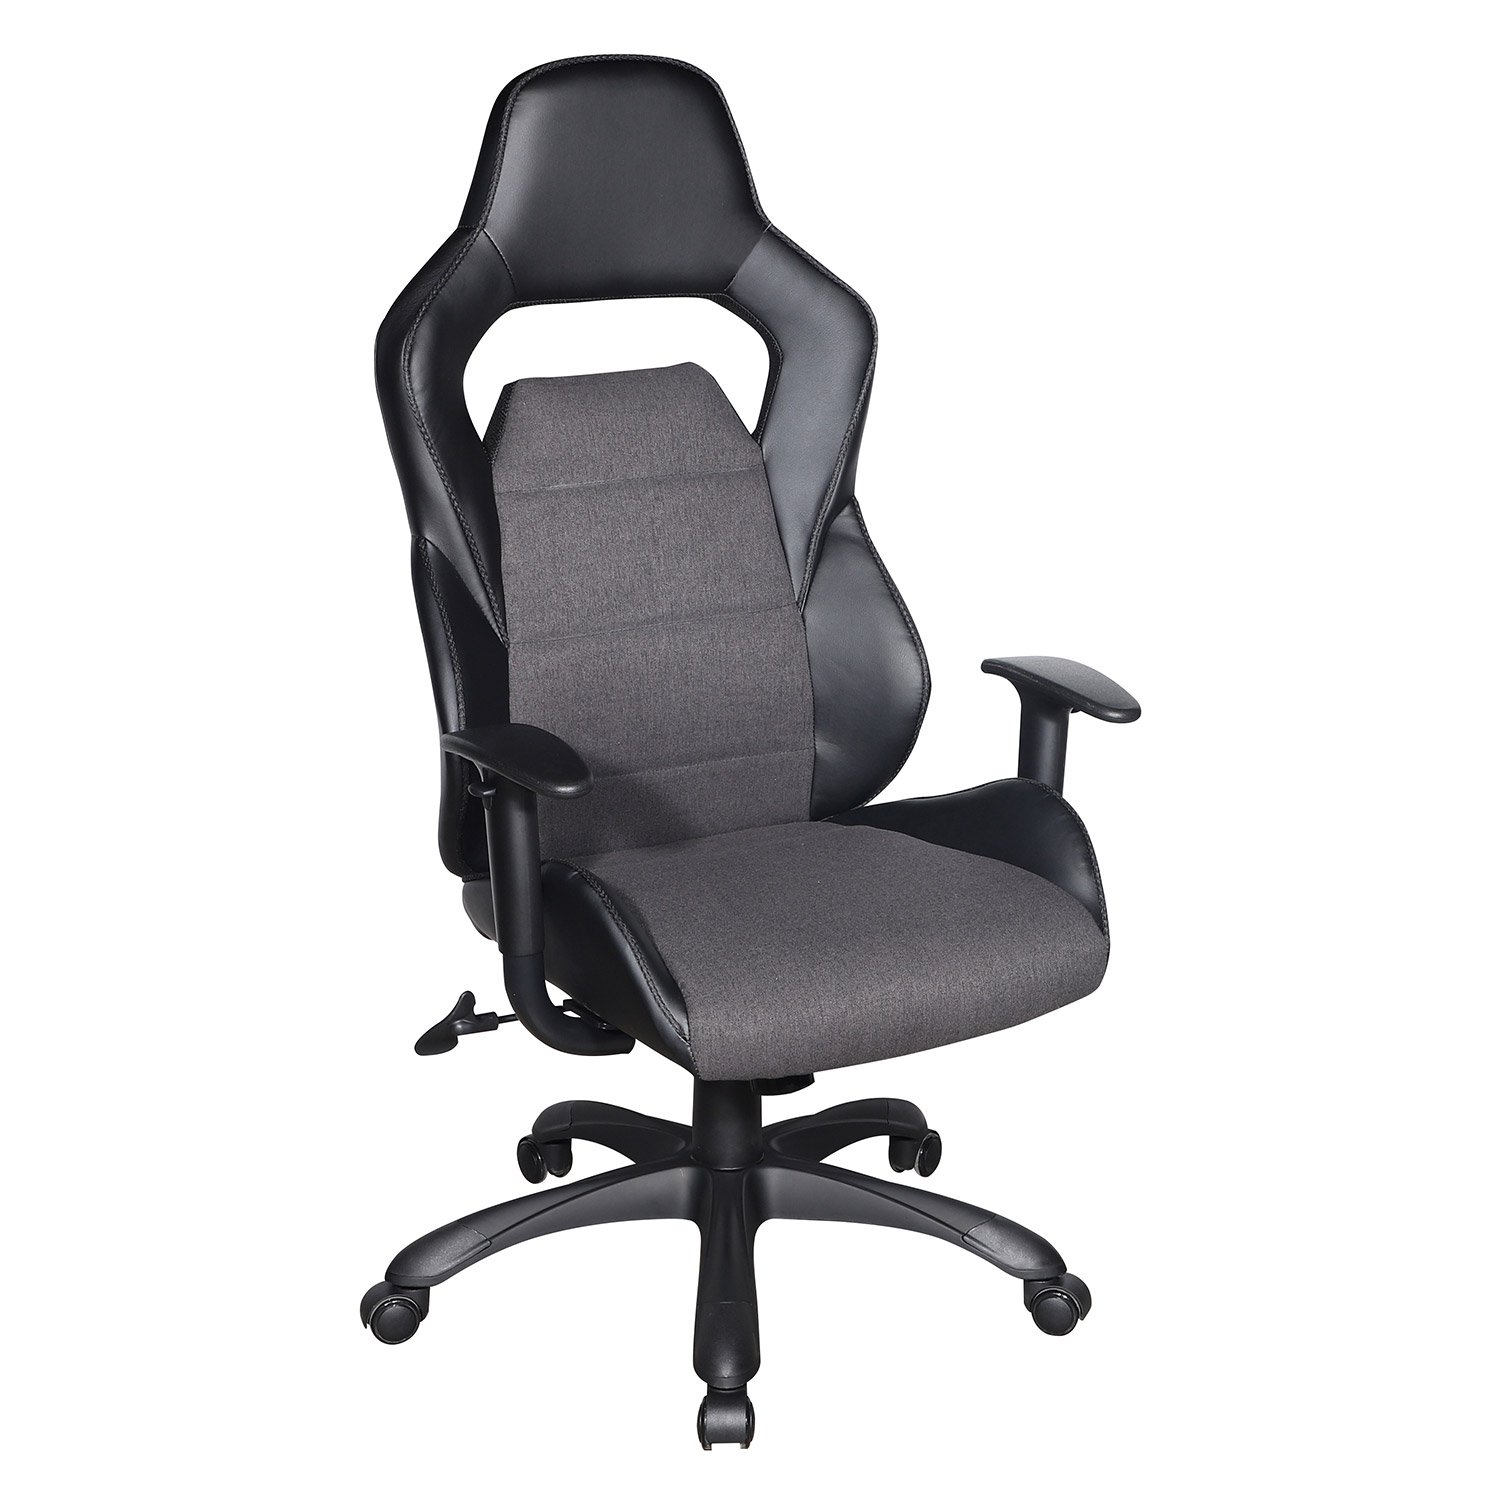 Biuro kėdė COMFORT, 69x68xH120-130cm, juoda